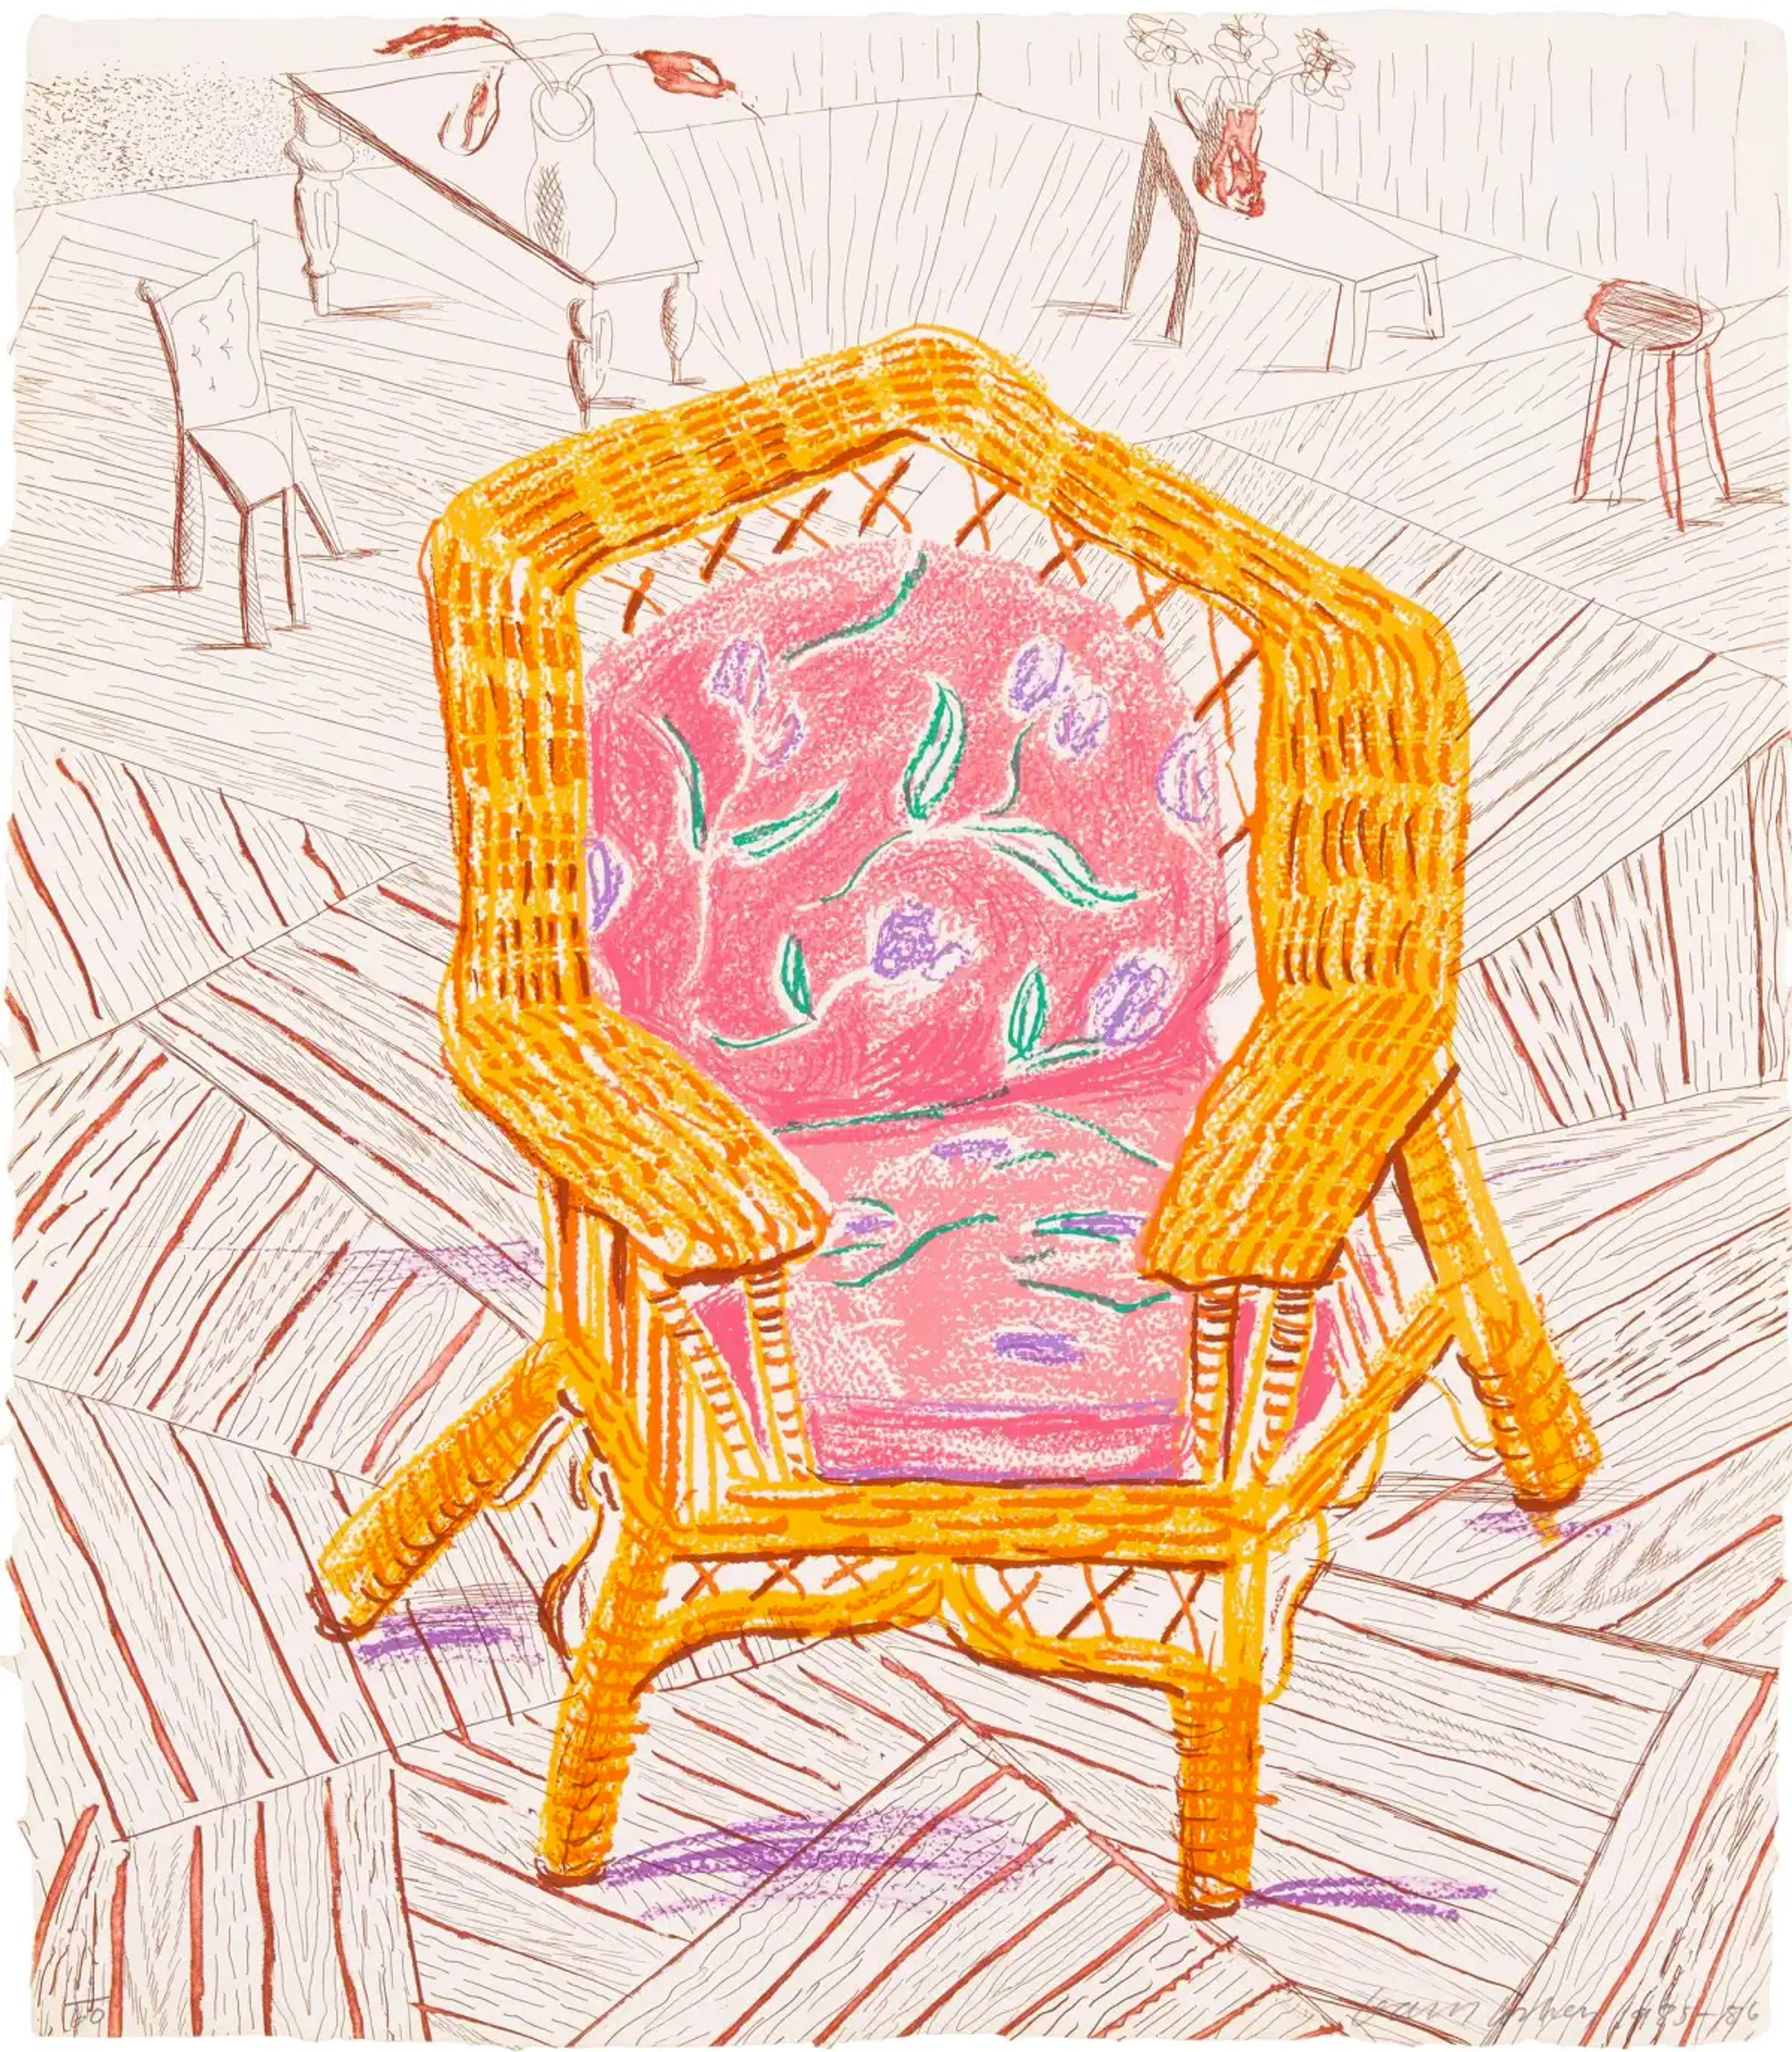 David Hockney's Love of Chairs